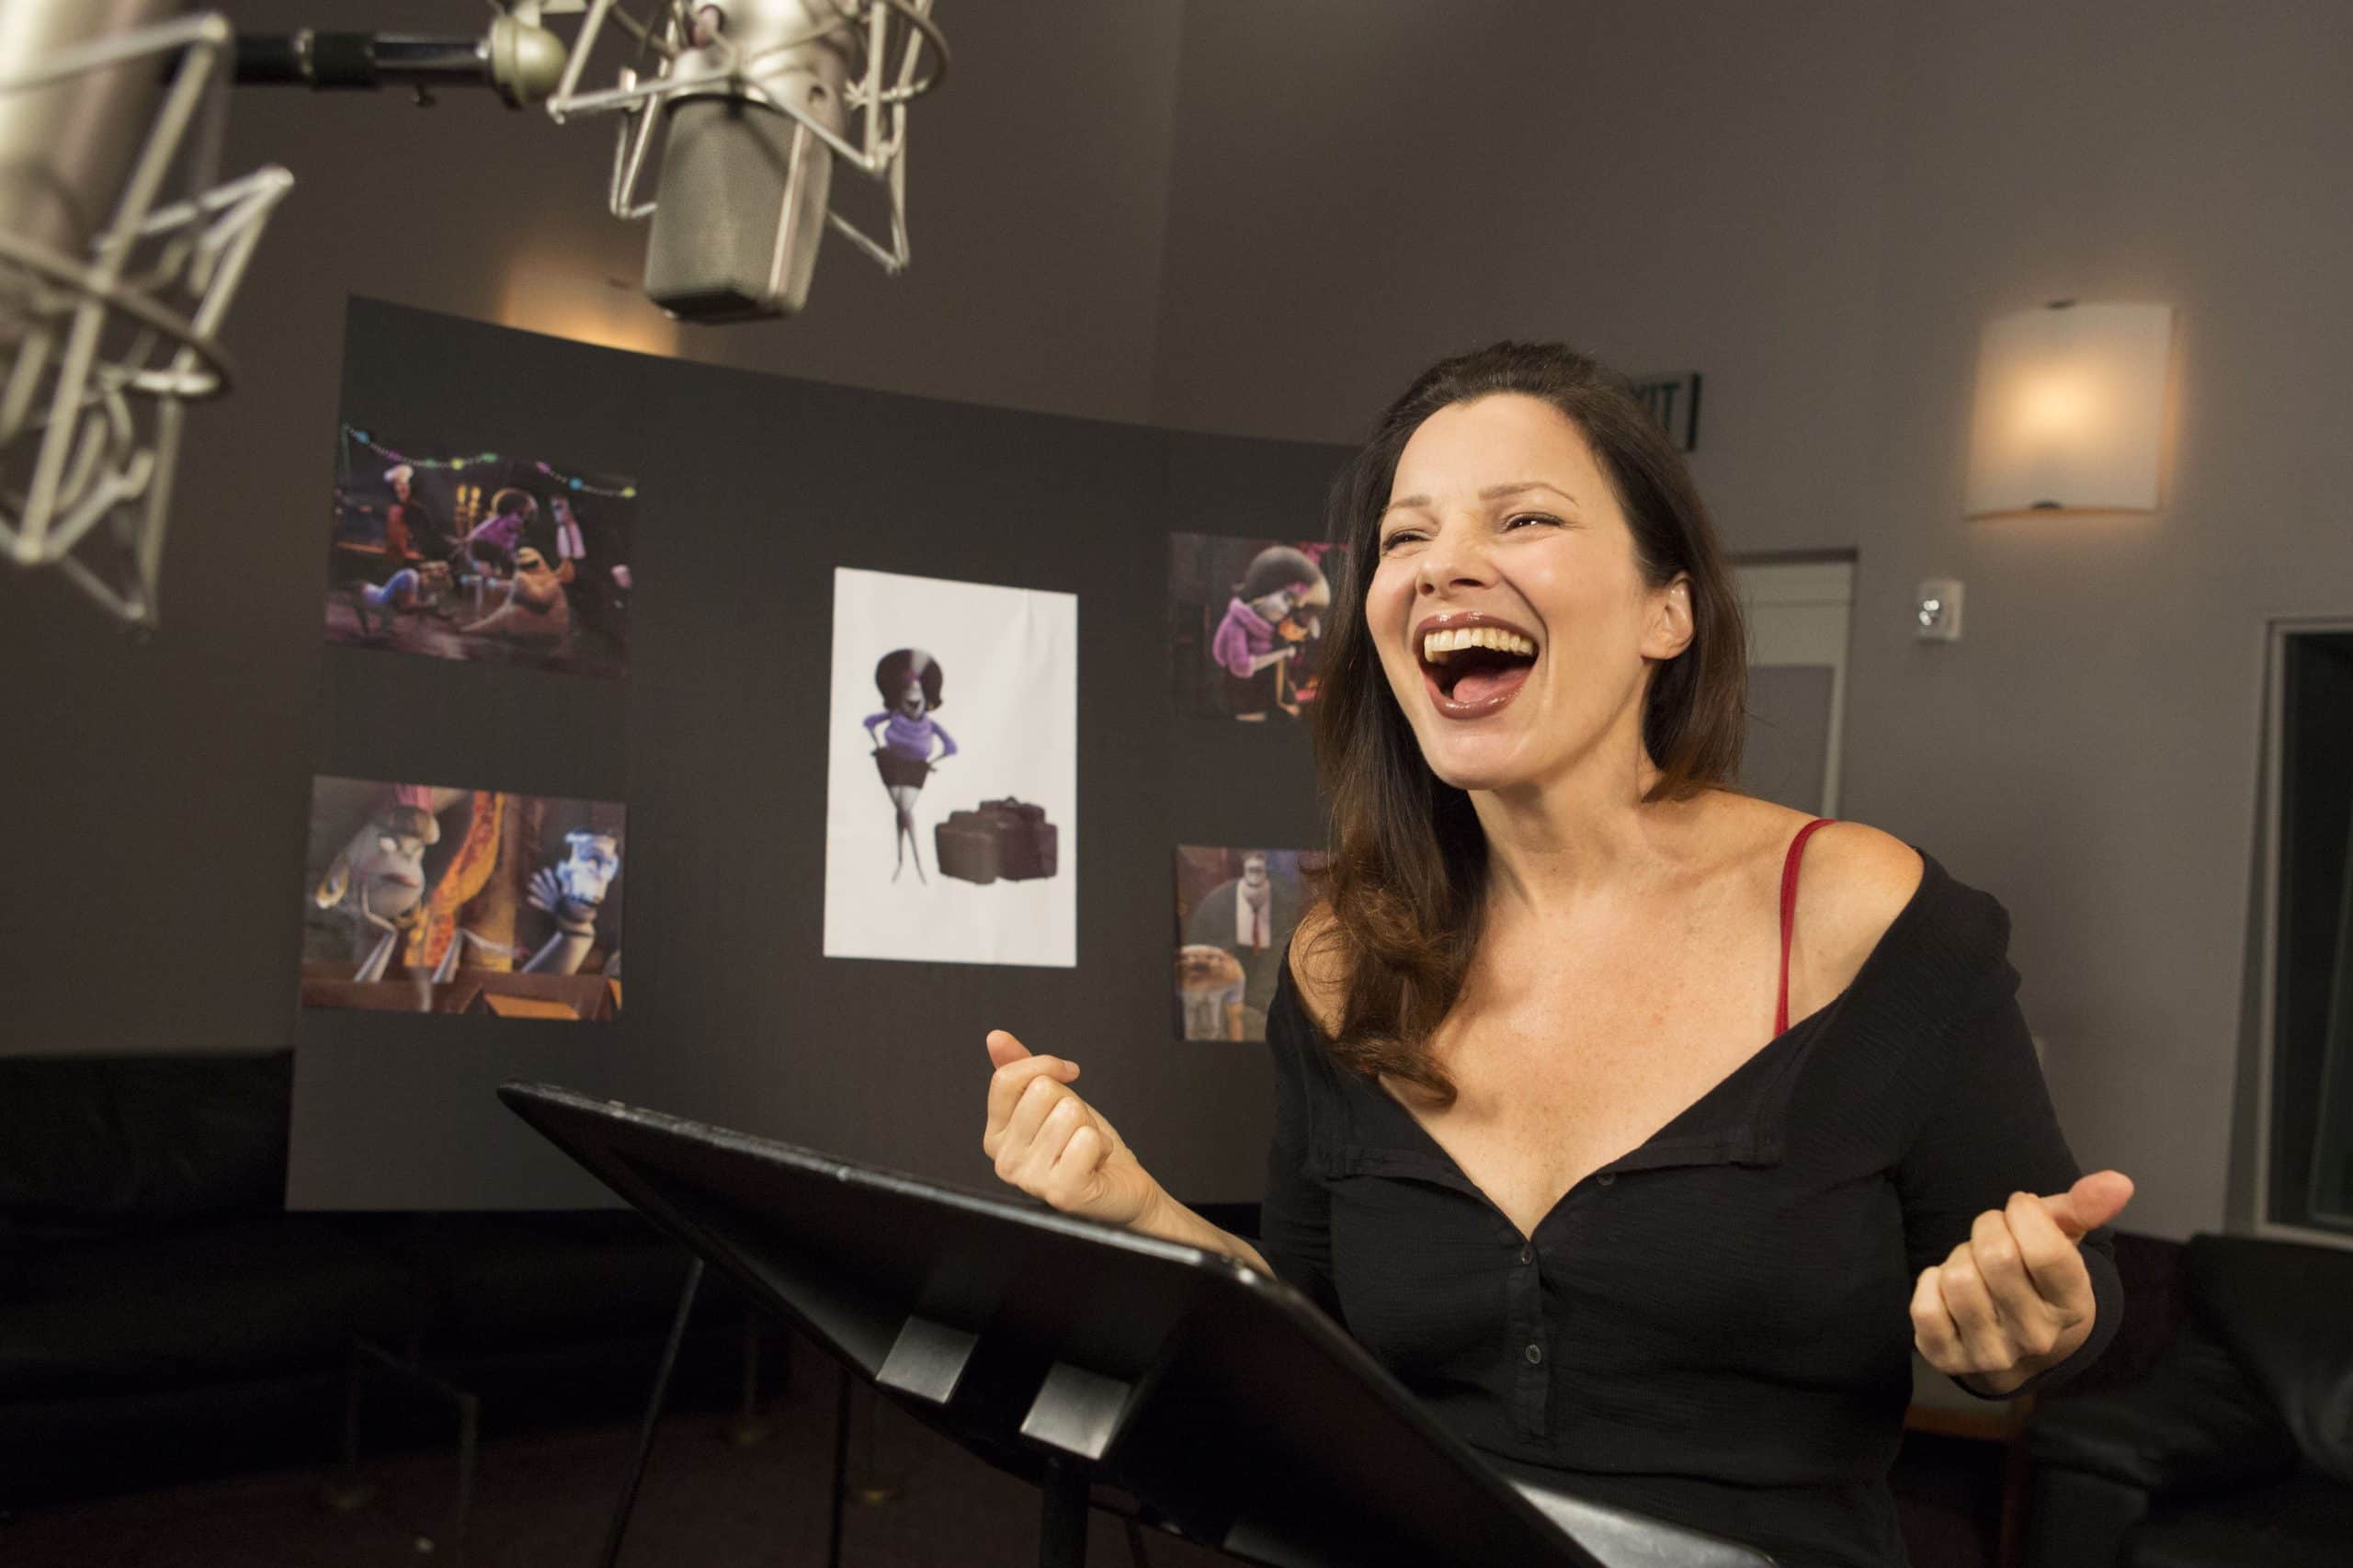 HOTEL TRANSYLVANIA 2, Fran Drescher in studio recording voice for character Eunice, 2015